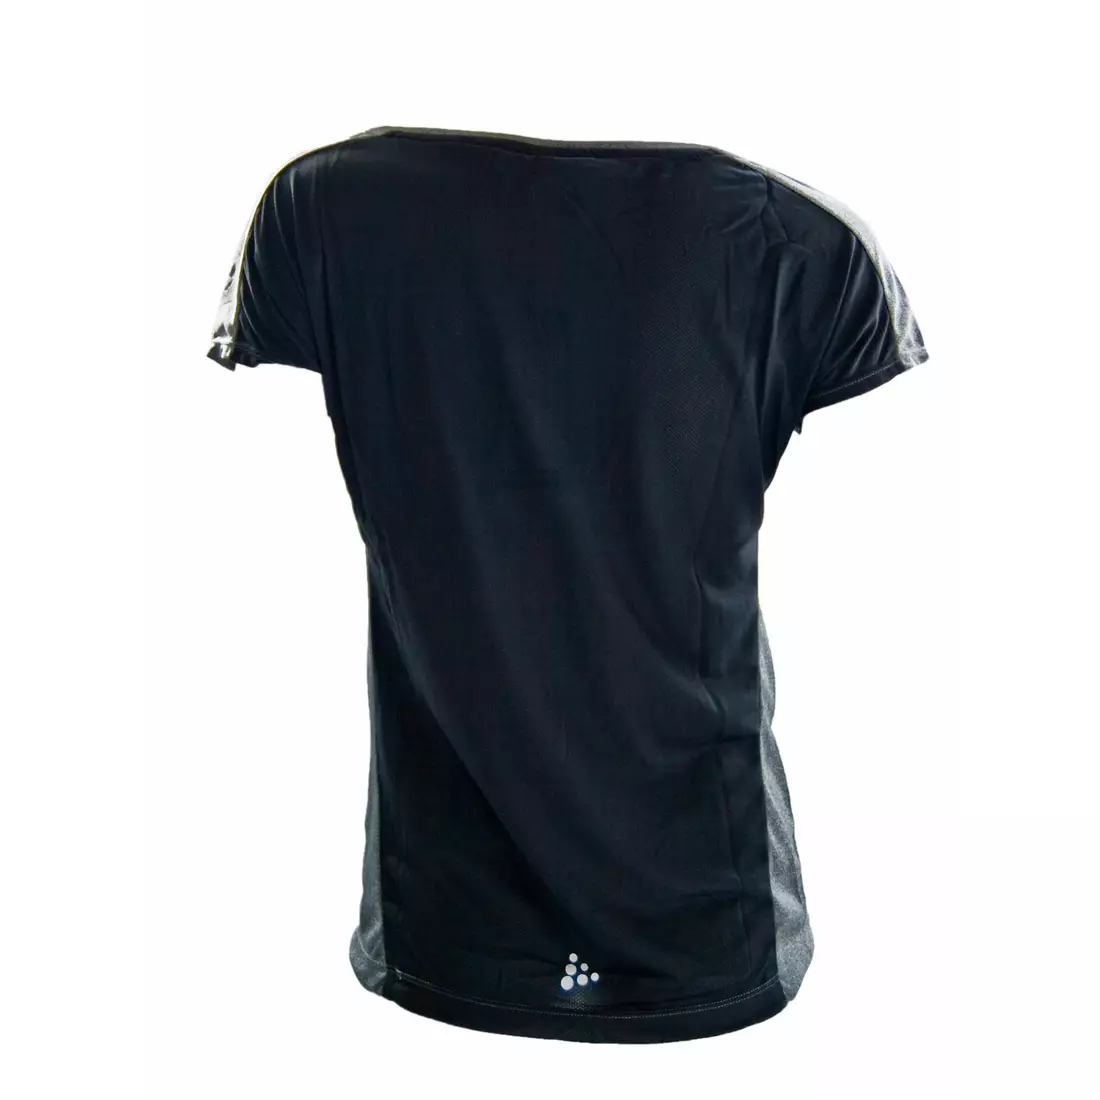 CRAFT RADIATE women's sports T-shirt, black and gray, 1905382-975000